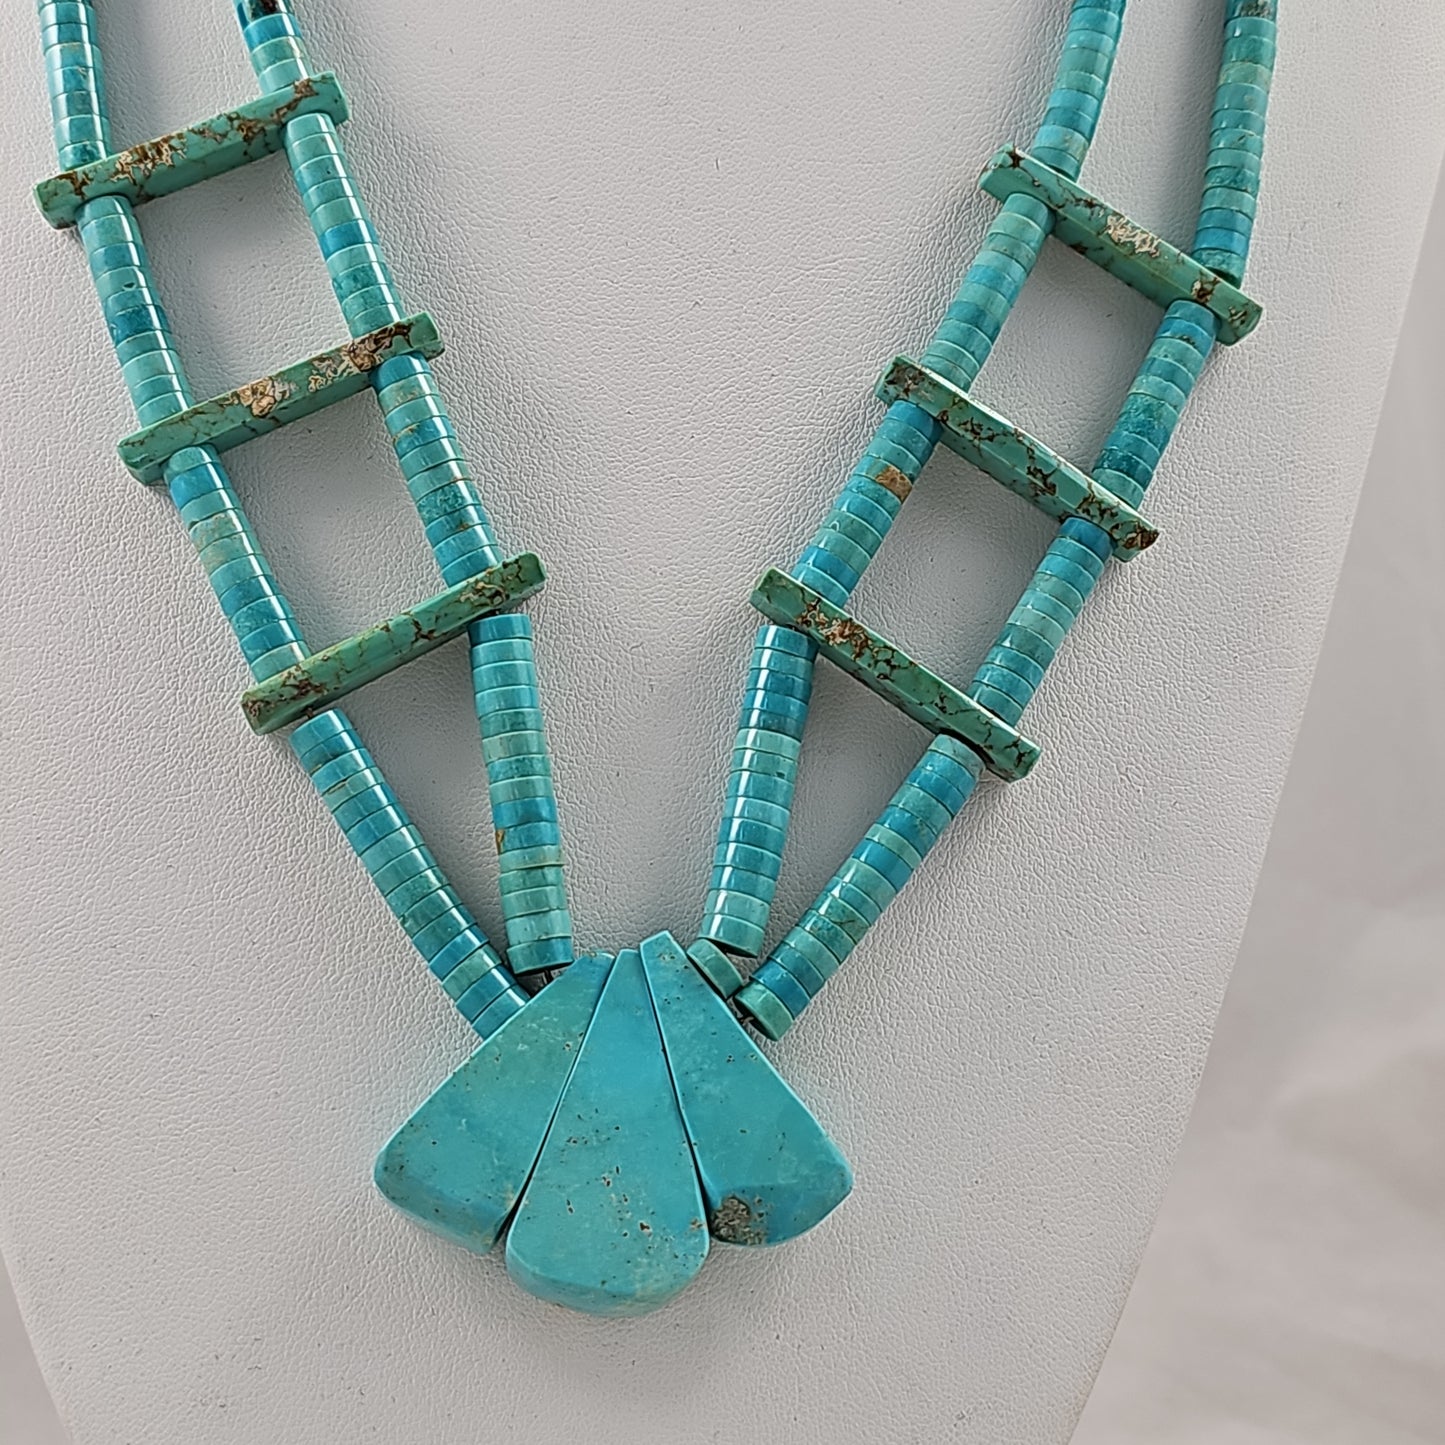 Vintage turquoise heishi necklace